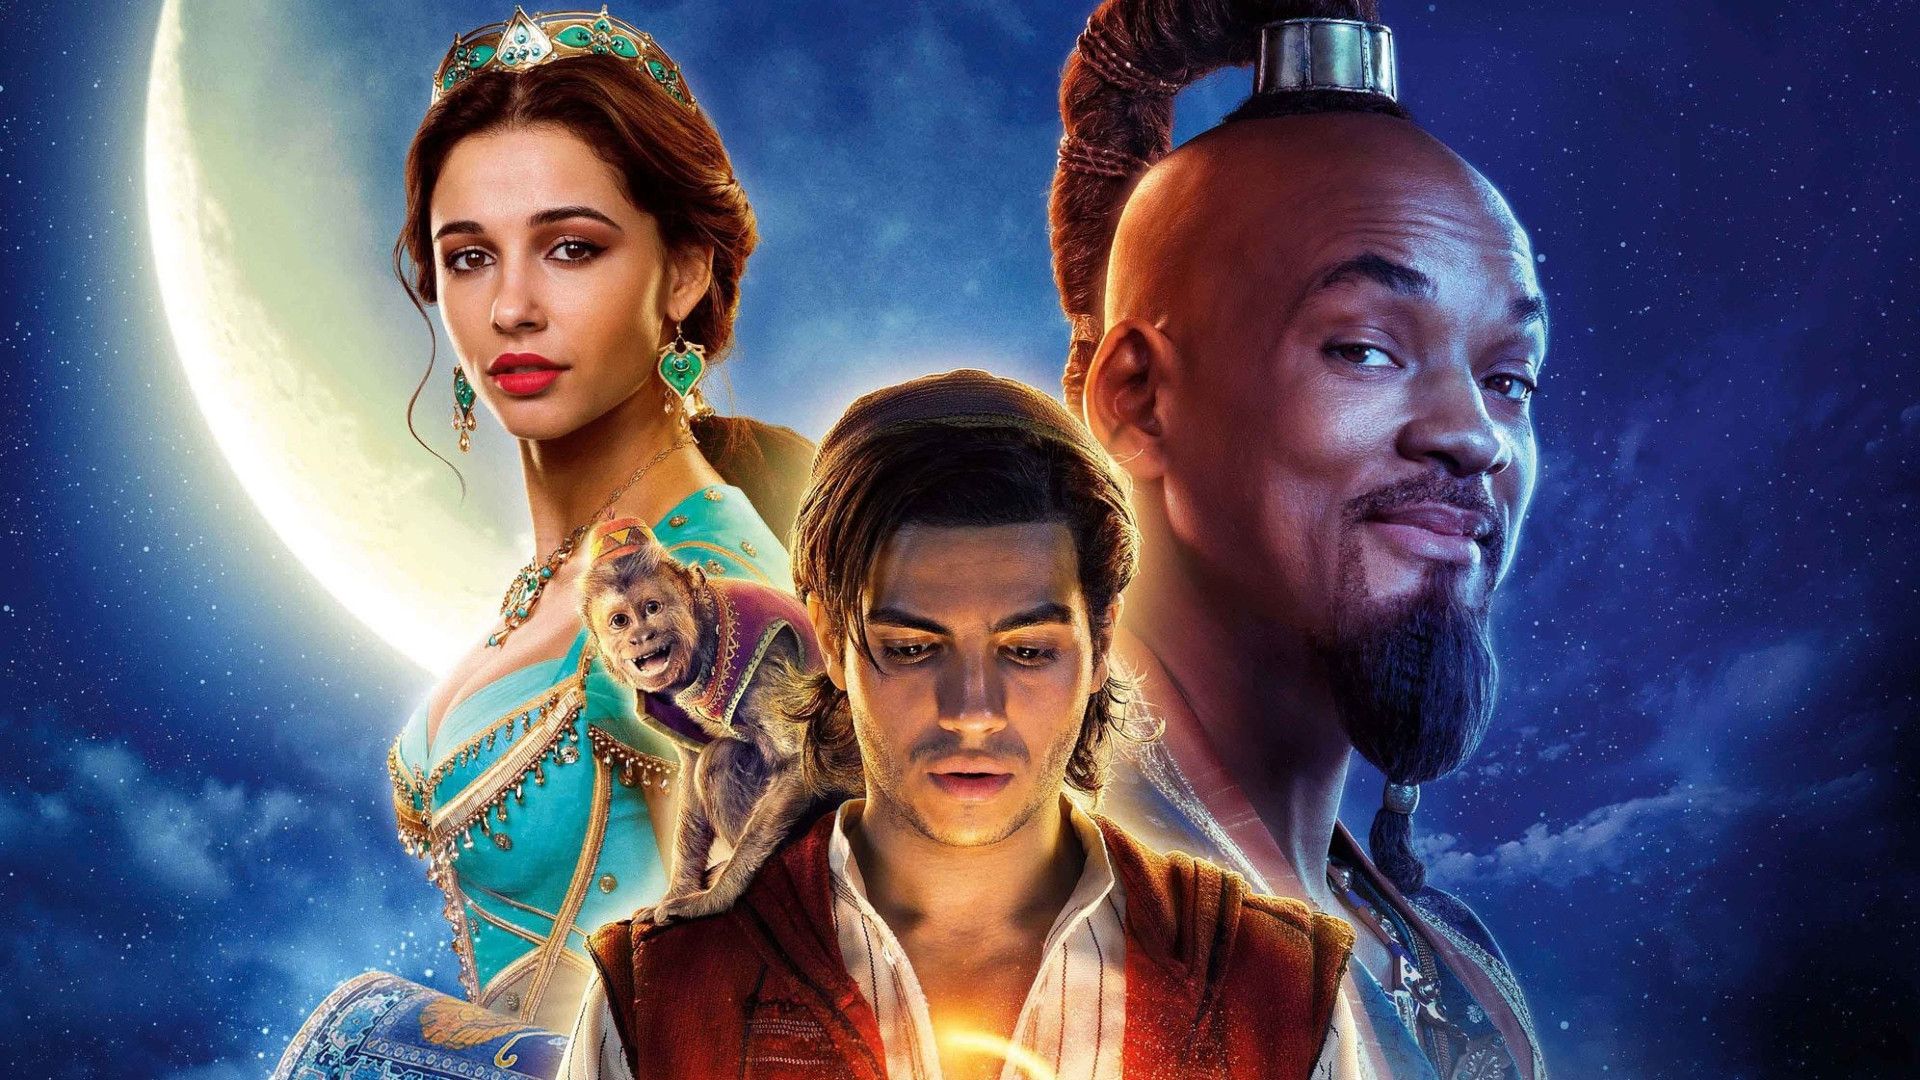 Aladdin background